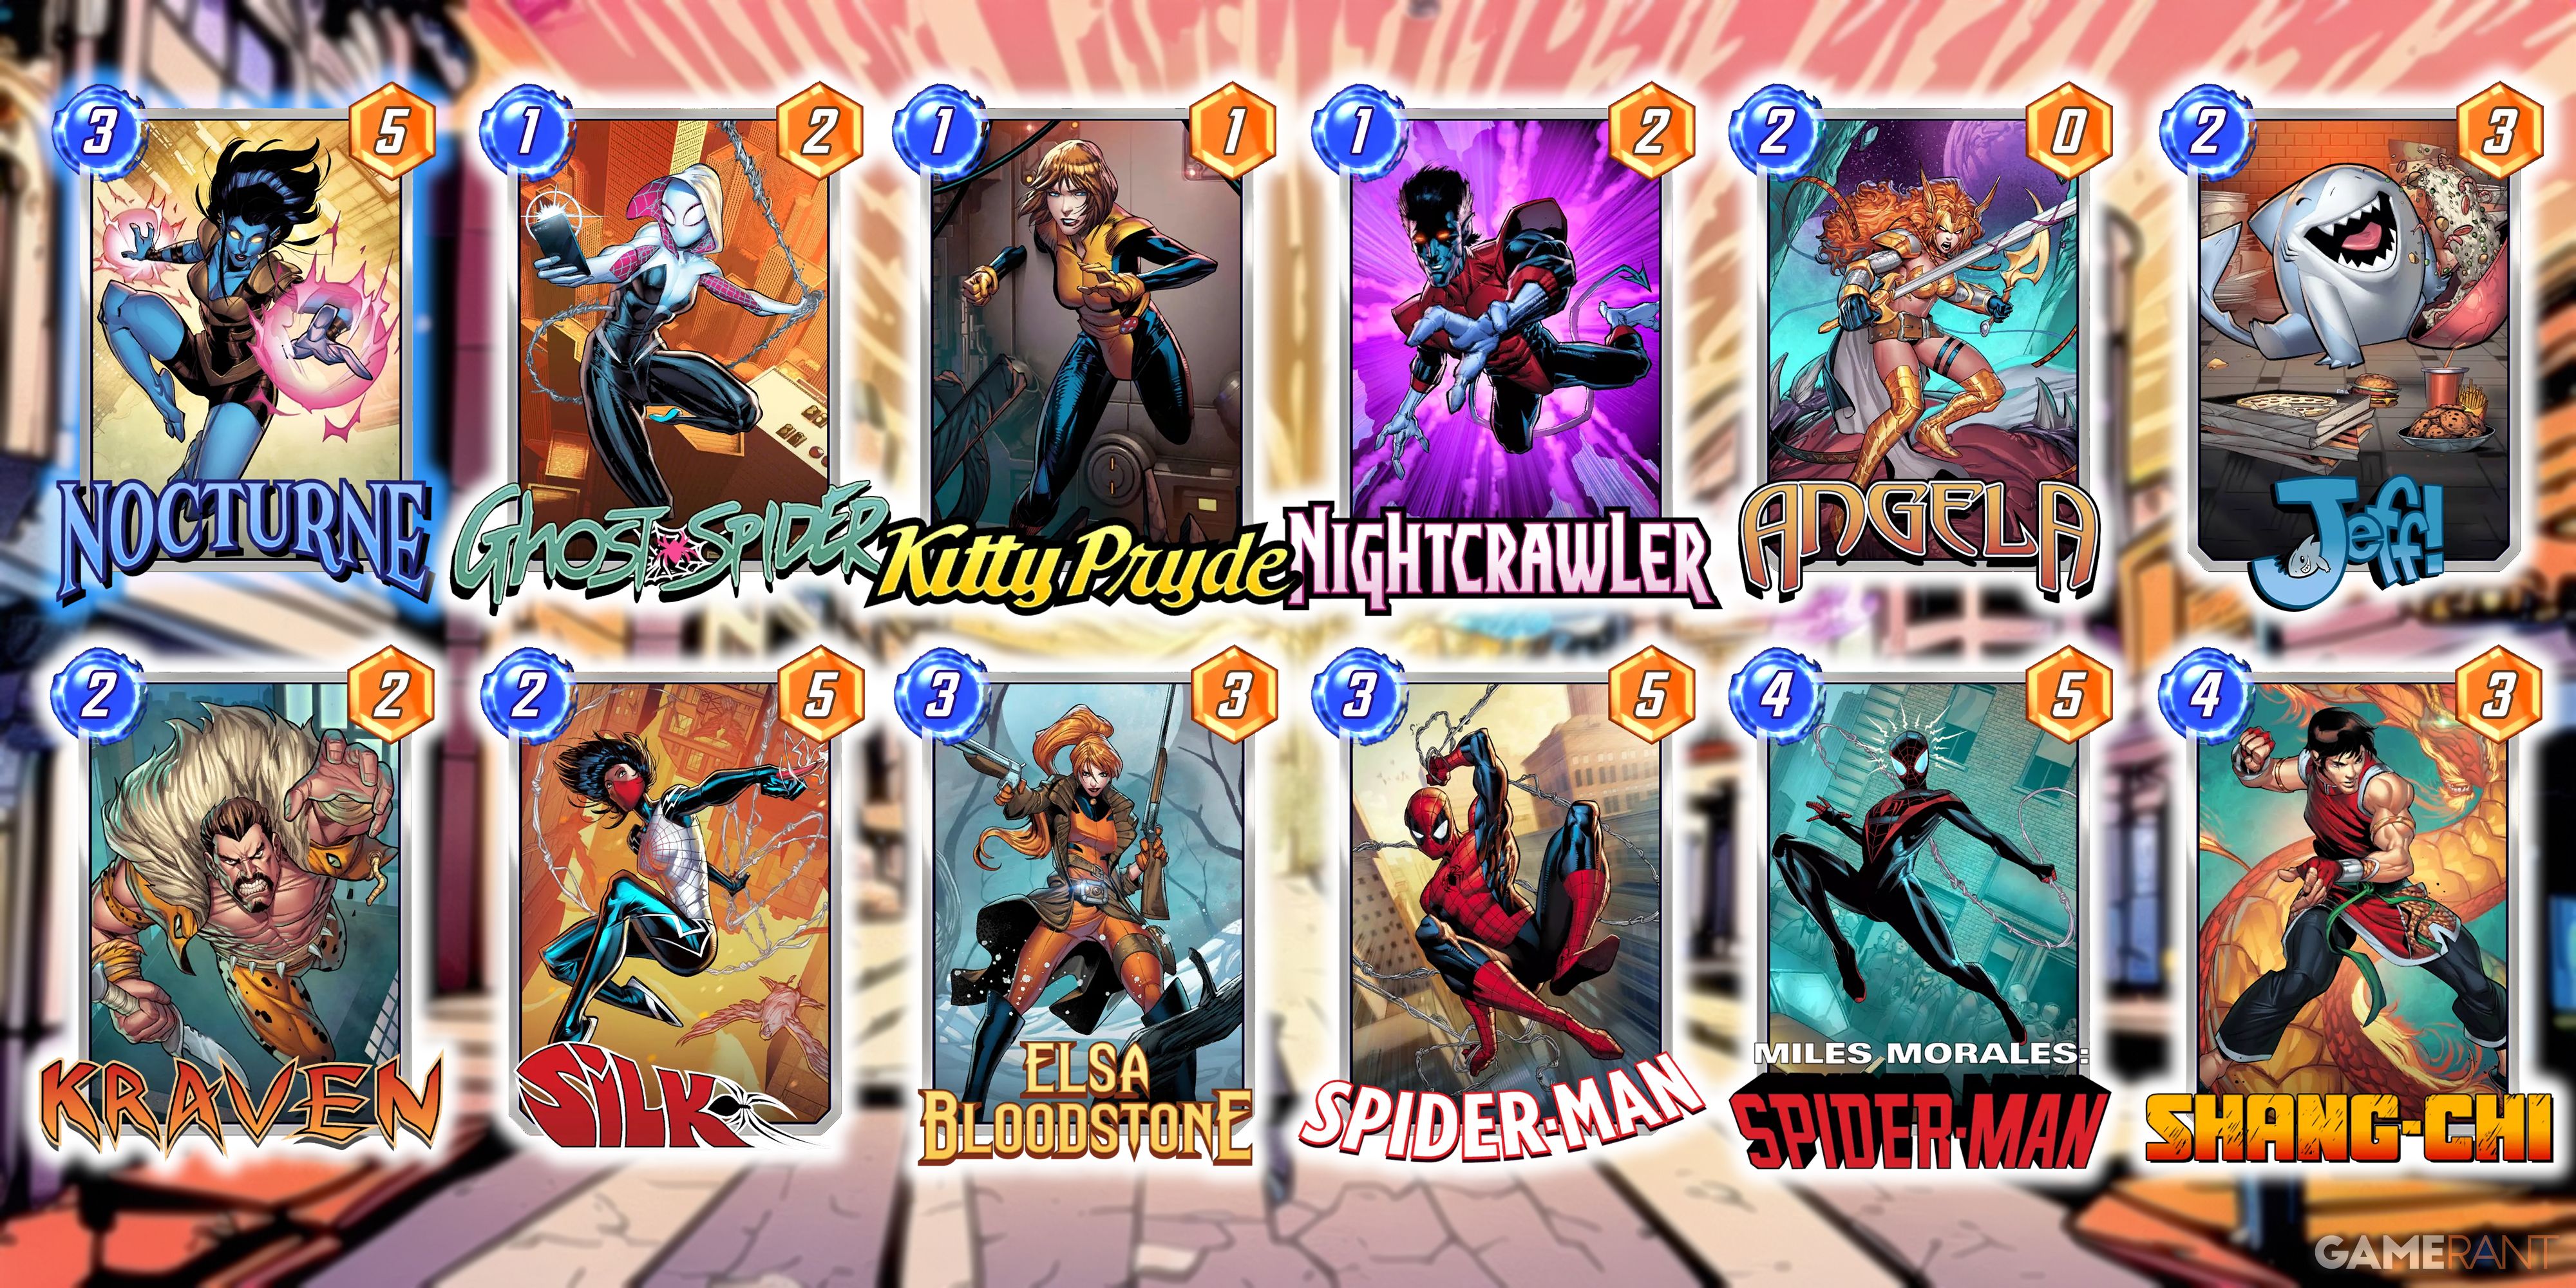 Marvel Snap deck comprised of Nocturne, Ghost-Spider, Kitty Pryde, Nightcrawler, Angela, Jeff, Kraven, Silk, Elsa Bloodstone, Spider-Man, Miles Morales Spider-Man, and Shang-Chi.